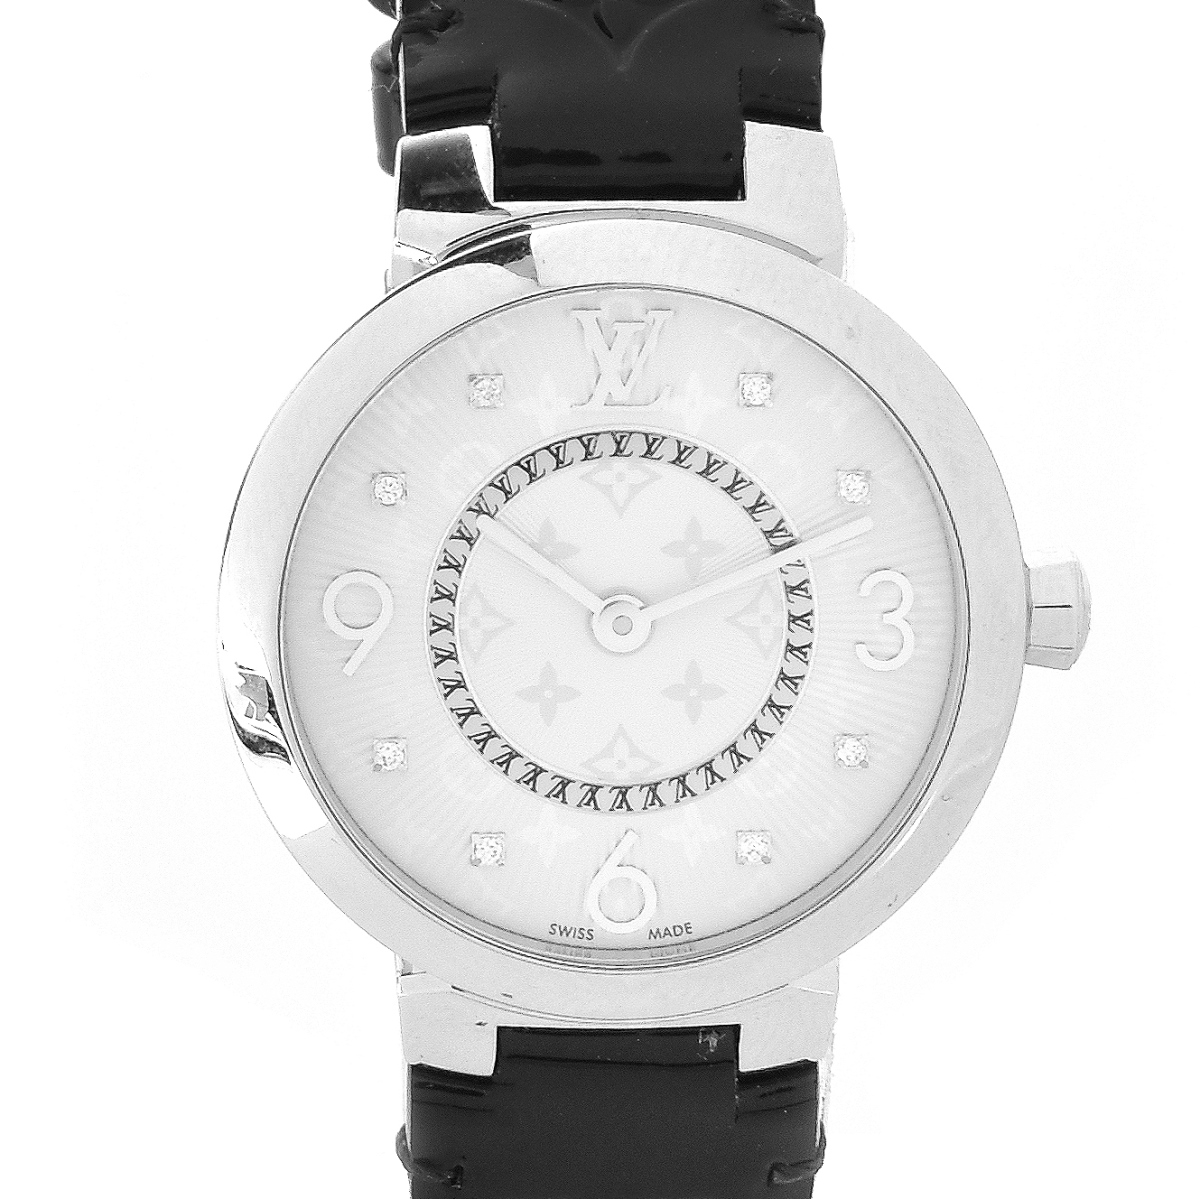 Louis Vuitton Tambour Slim Watch